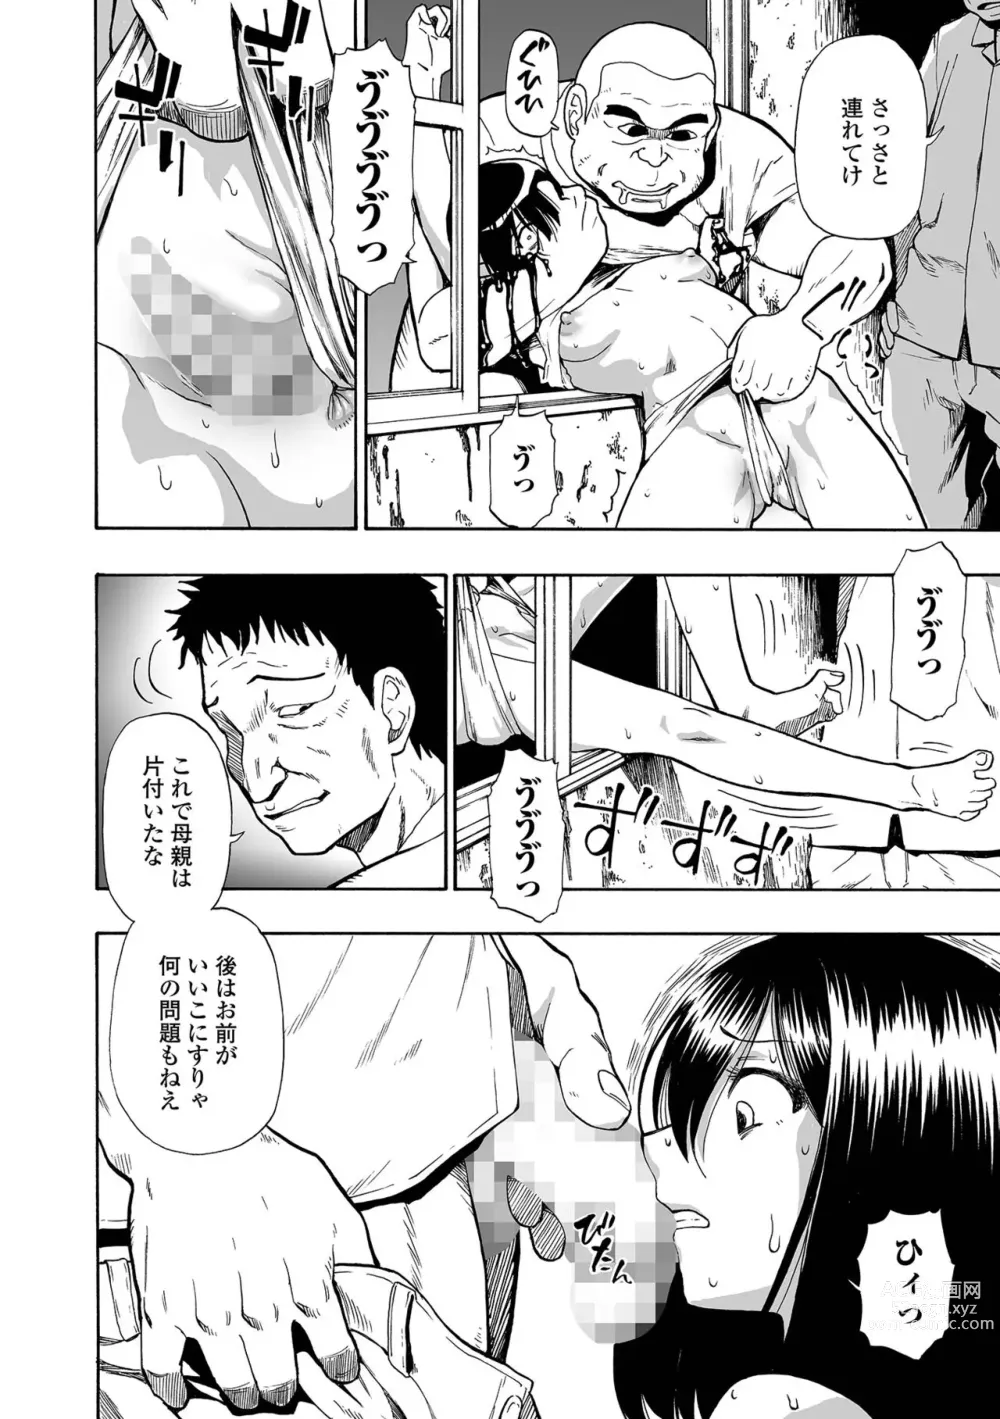 Page 14 of manga Garbage Dump Ch. 1-9